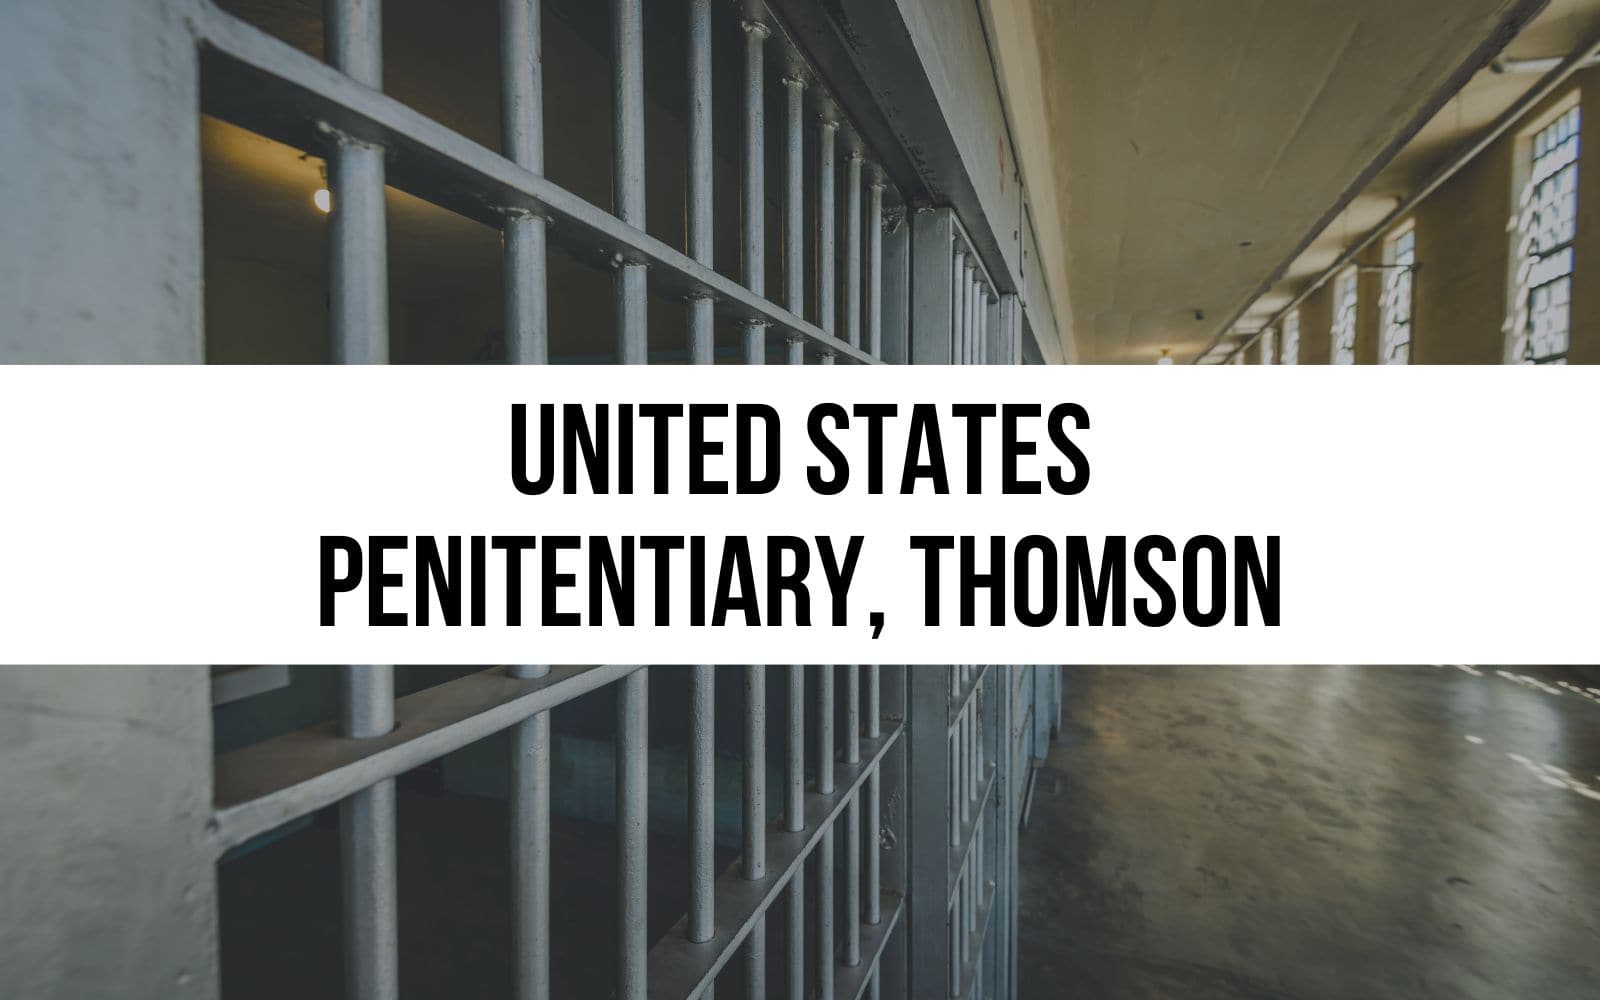 United States Penitentiary Thomson